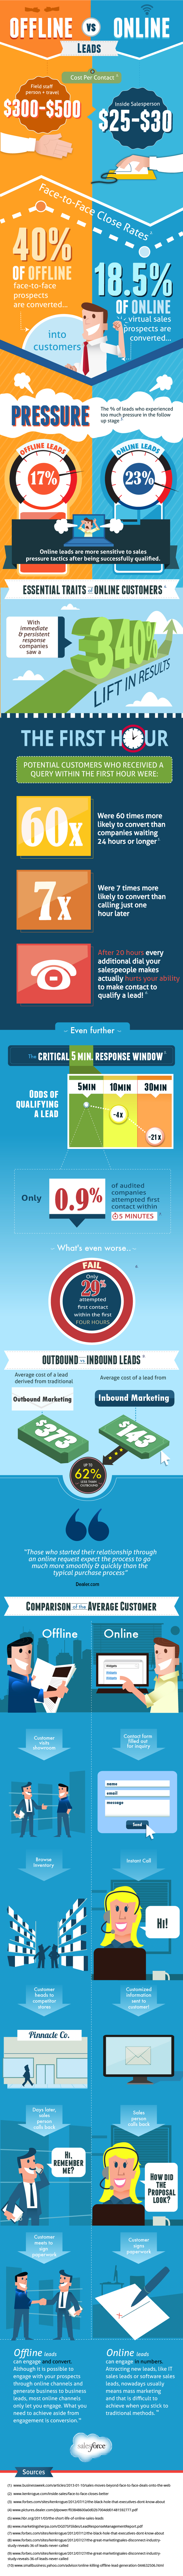 Social Selling Offline vs. Online Leads [Infographic]